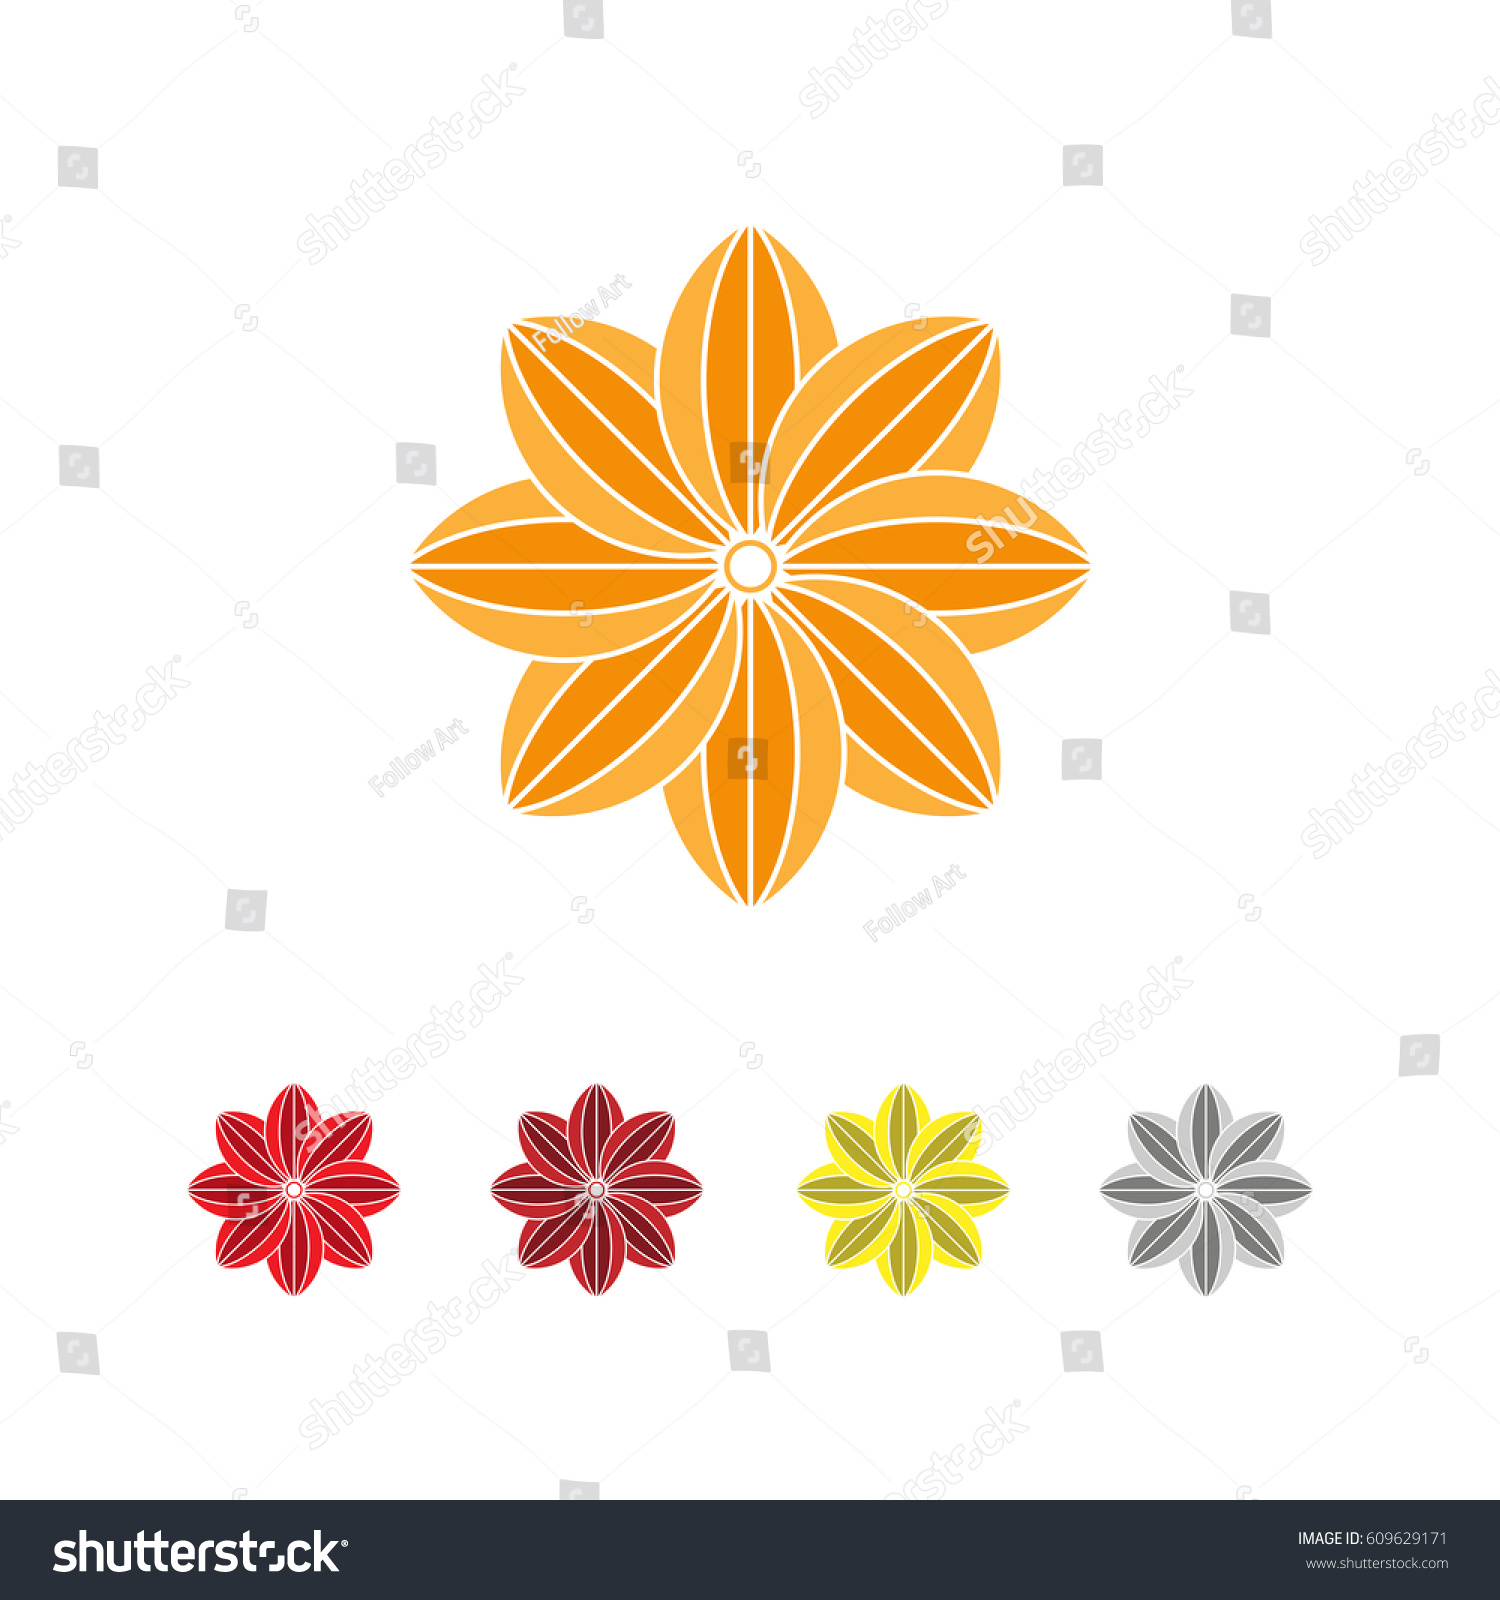 Edit Vectors Free Online - flower logo | Shutterstock Editor